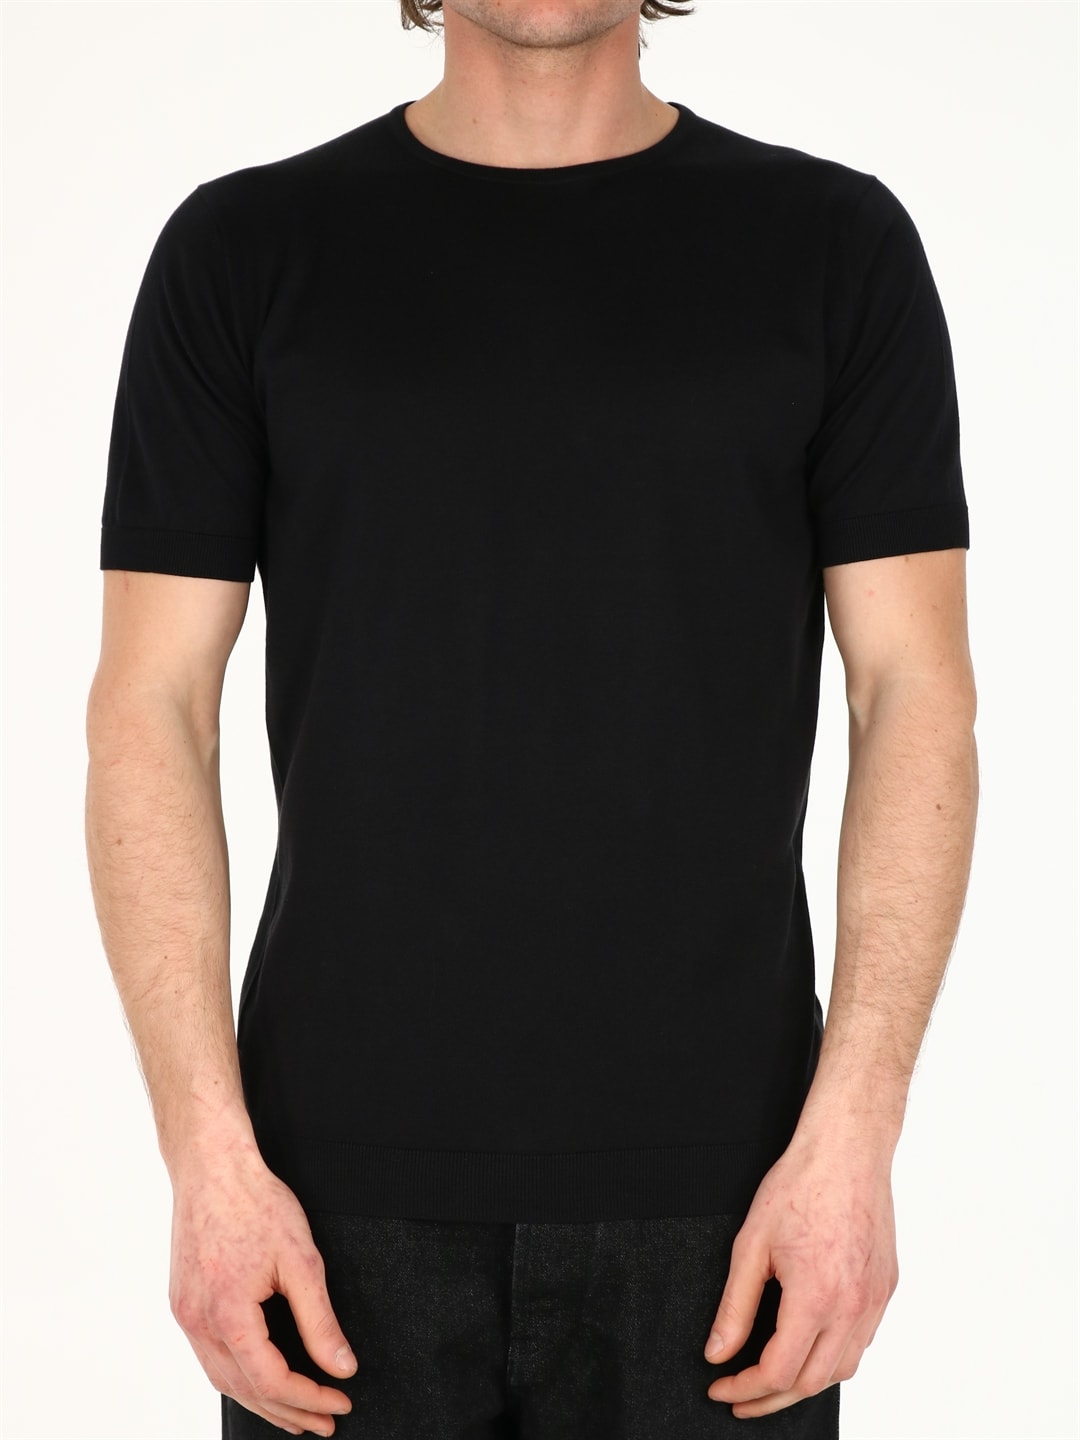 John Smedley Black Cotton T-shirt